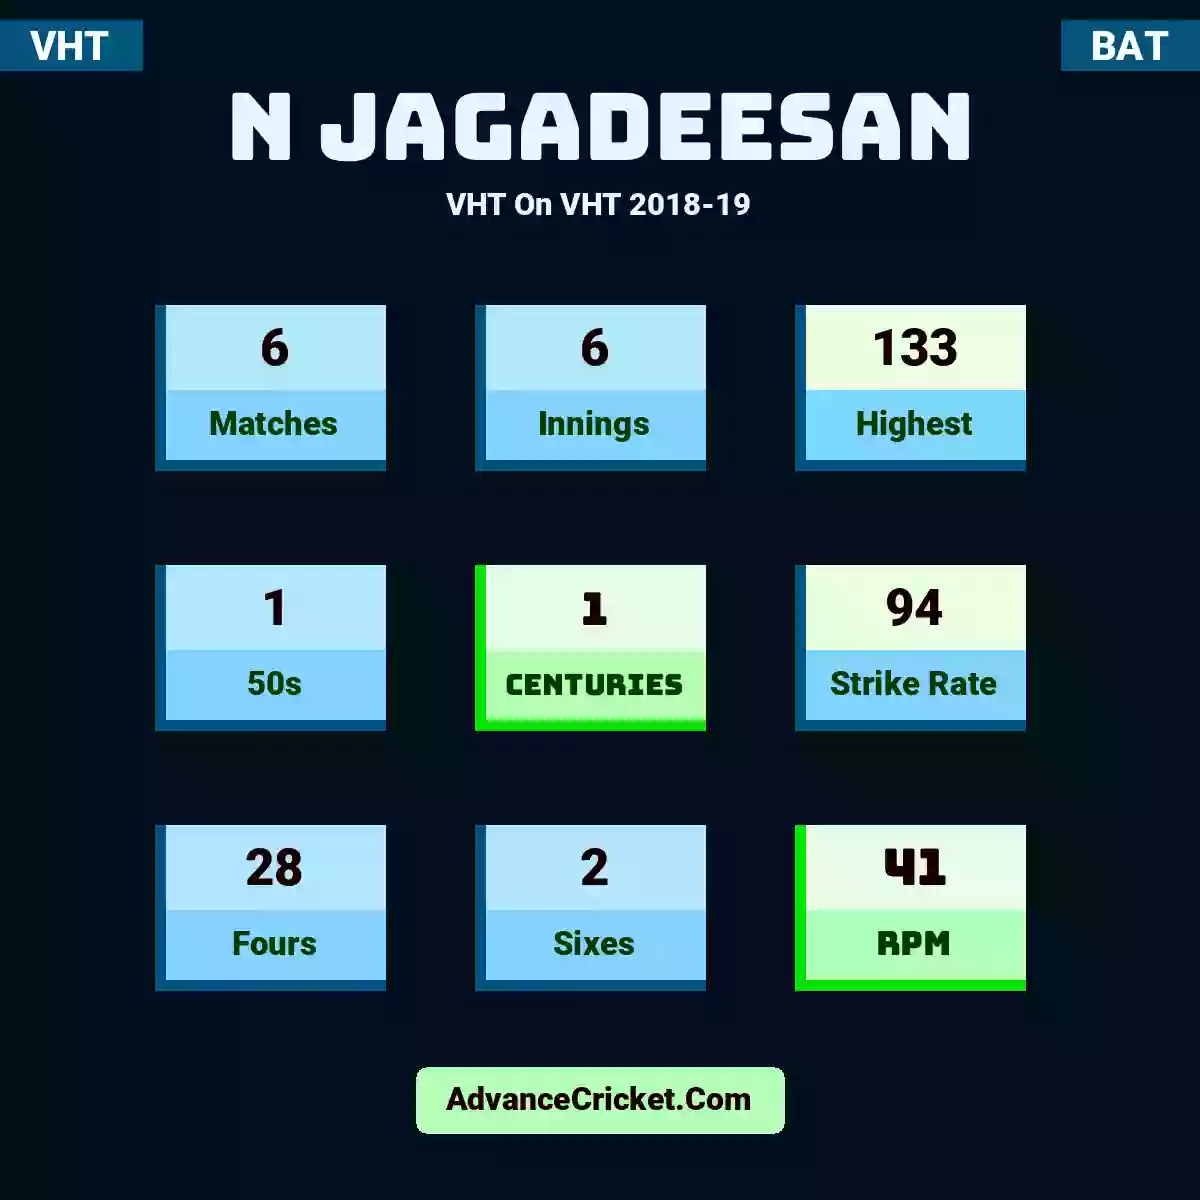 N Jagadeesan VHT  On VHT 2018-19, N Jagadeesan played 6 matches, scored 133 runs as highest, 1 half-centuries, and 1 centuries, with a strike rate of 94. N.Jagadeesan hit 28 fours and 2 sixes, with an RPM of 41.